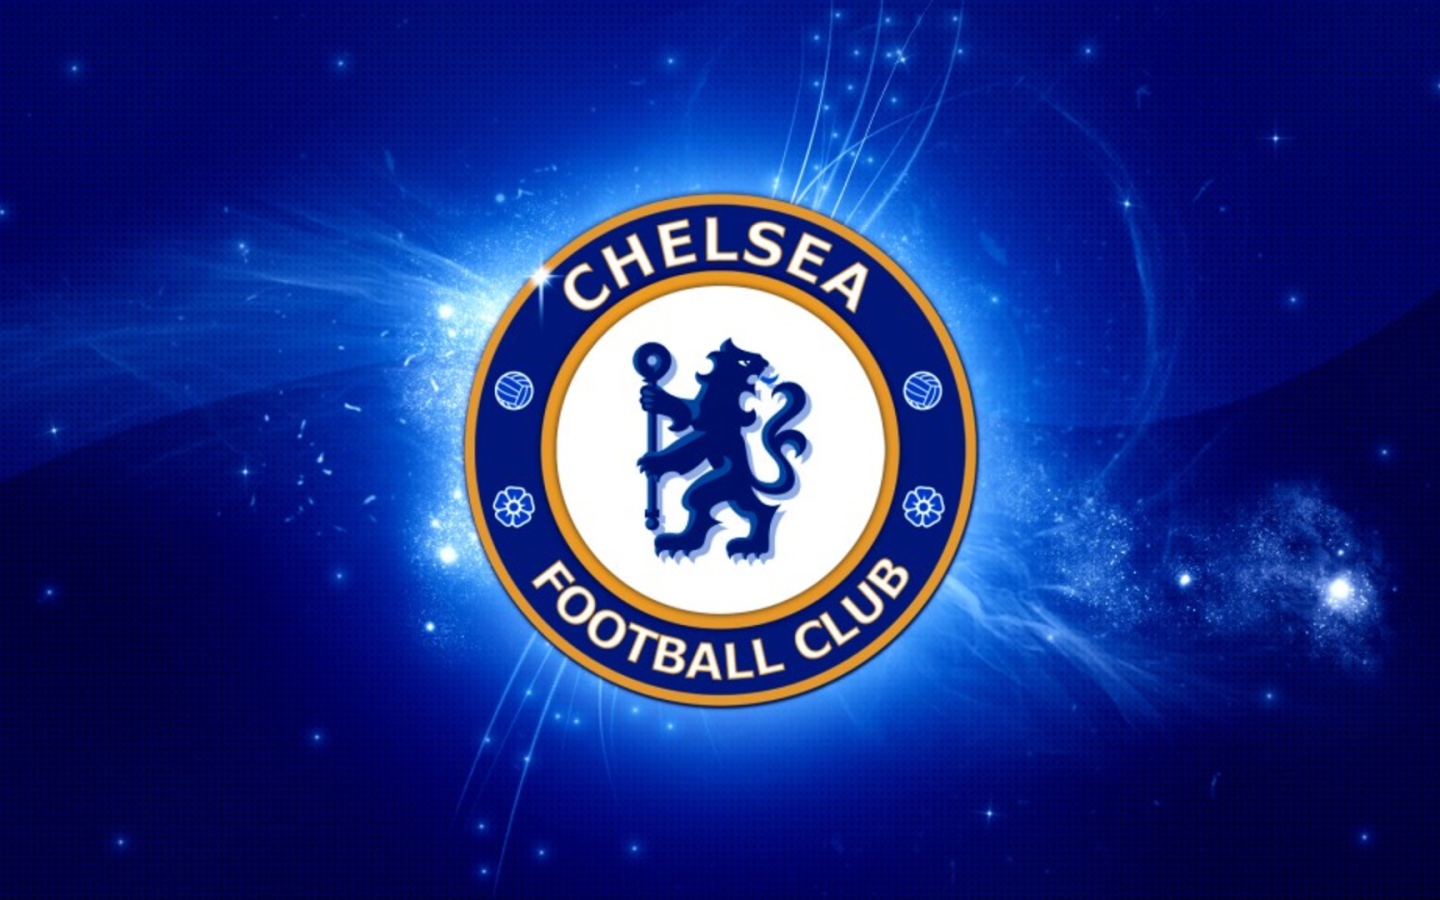 Football club Chelsea logo